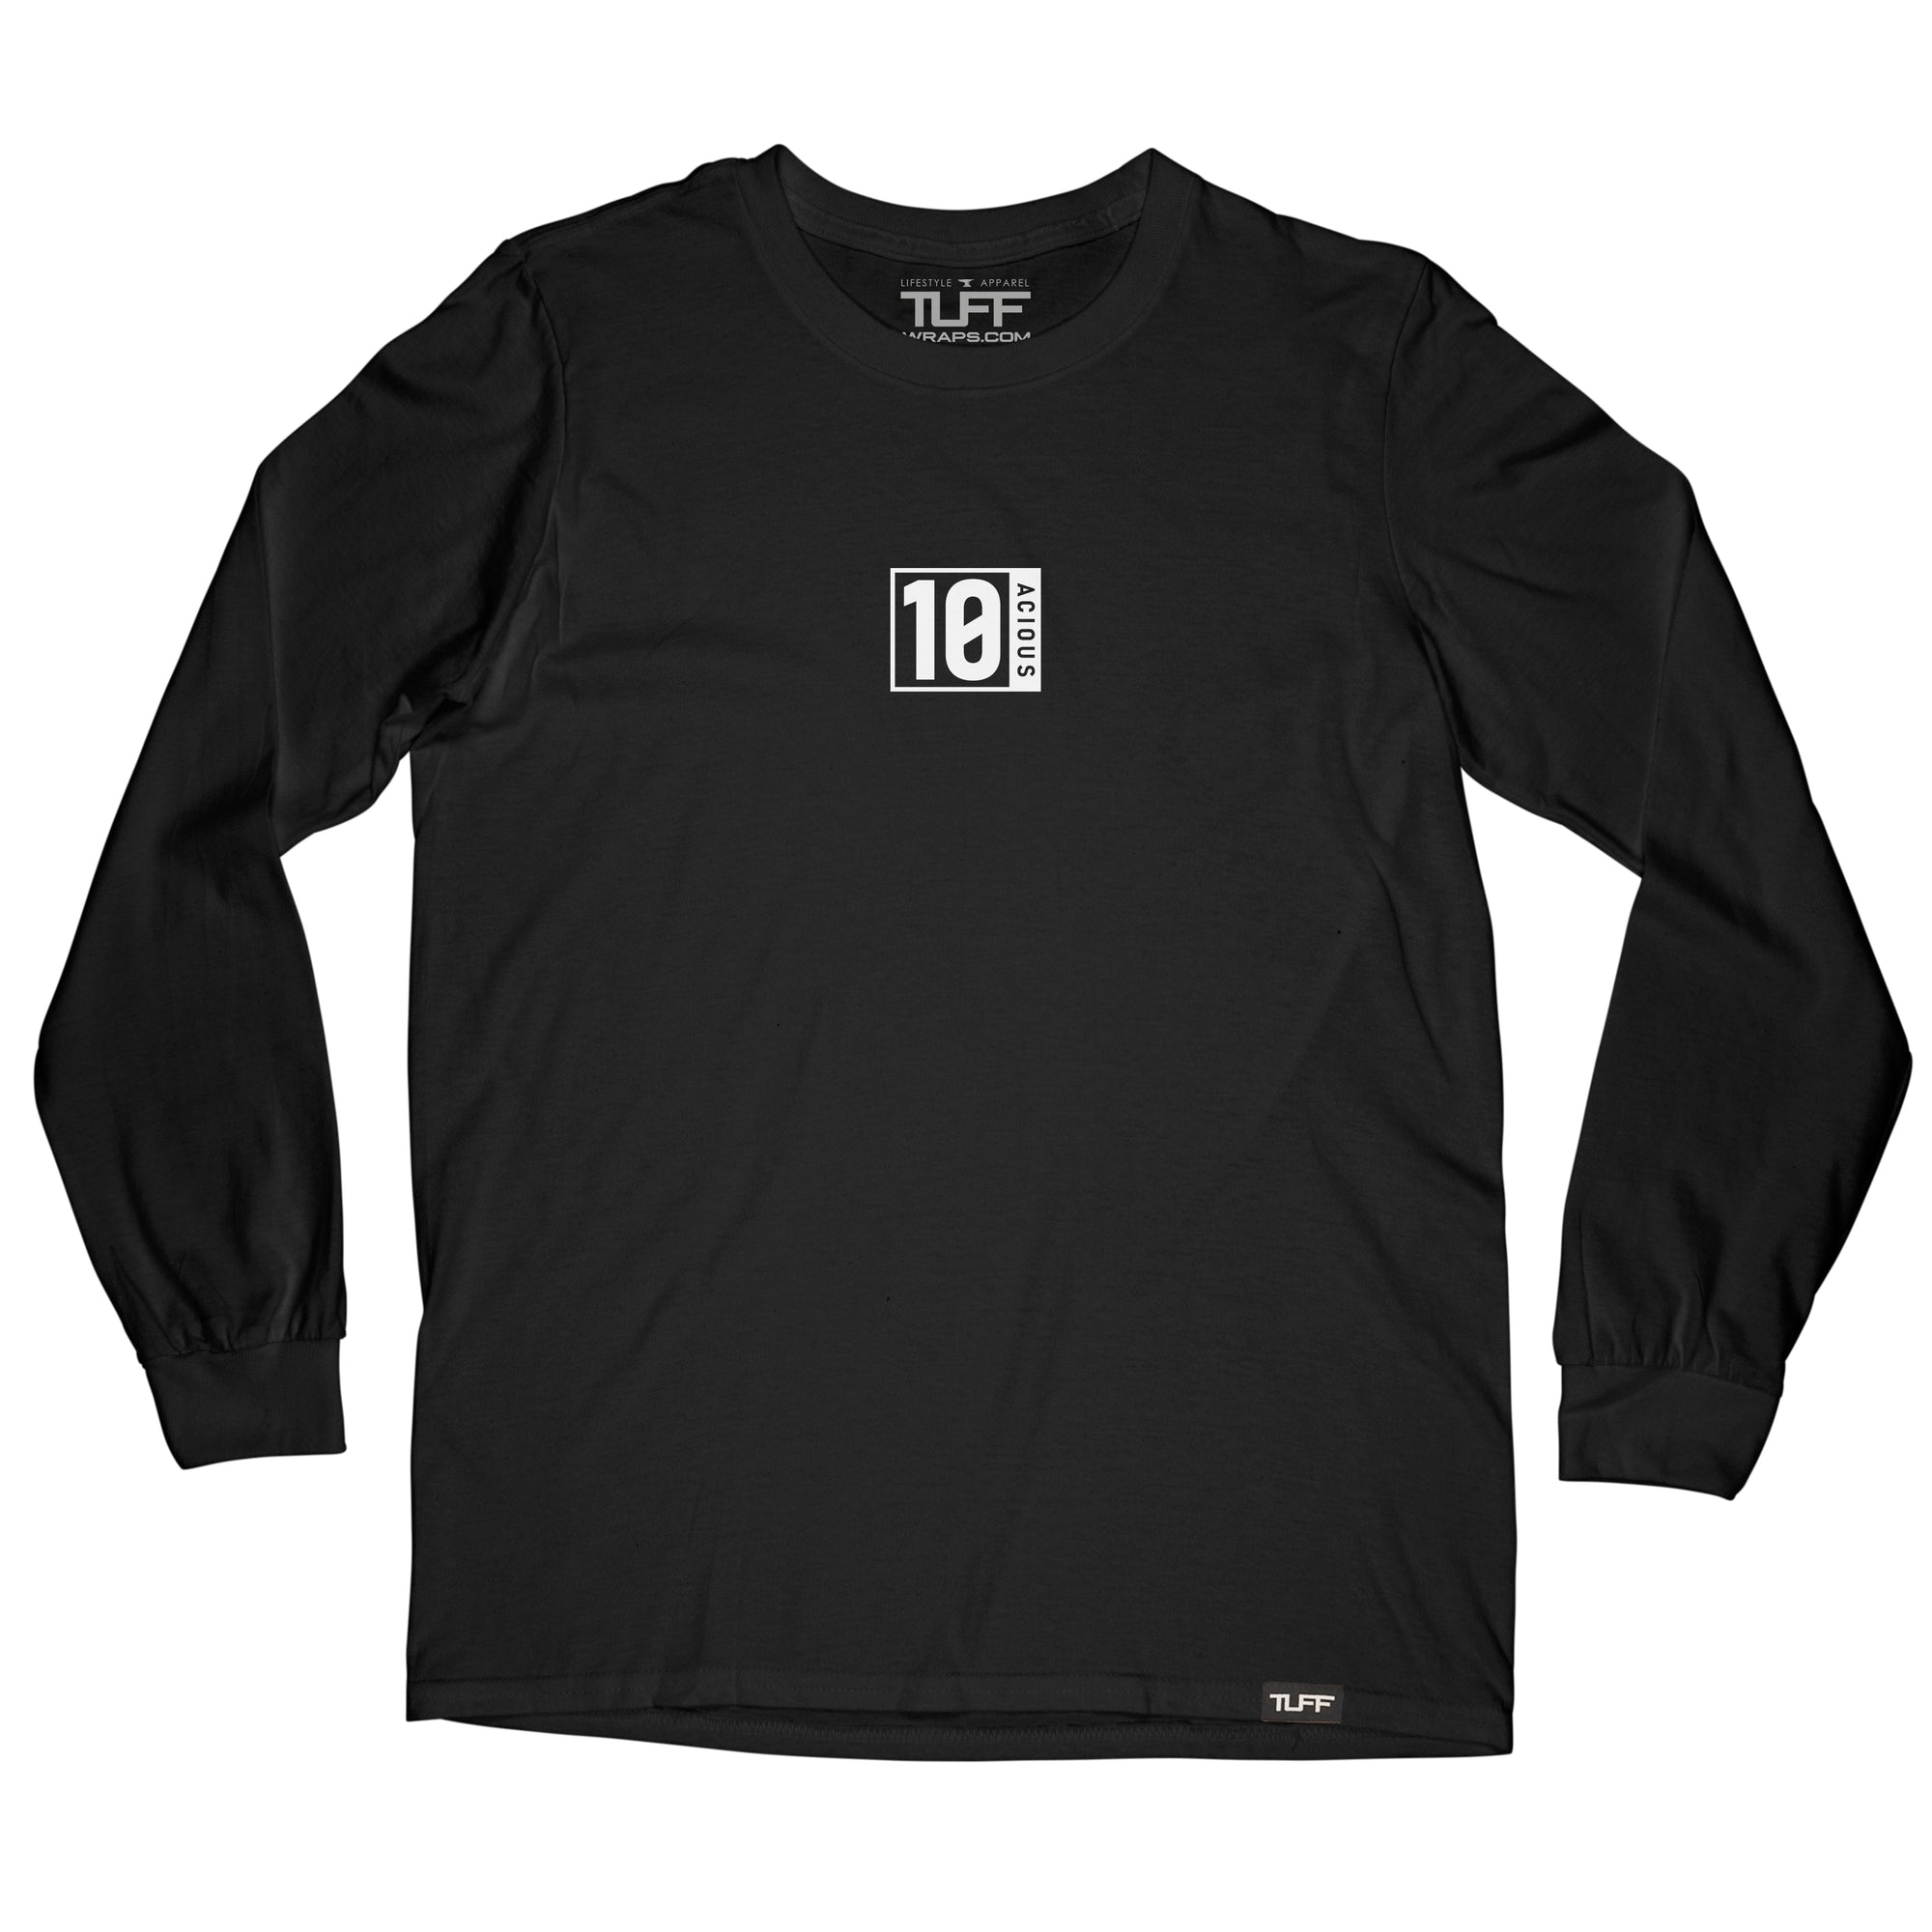 TUFF 10acious Original Long Sleeve Tee Men's Long Sleeve T-Shirt